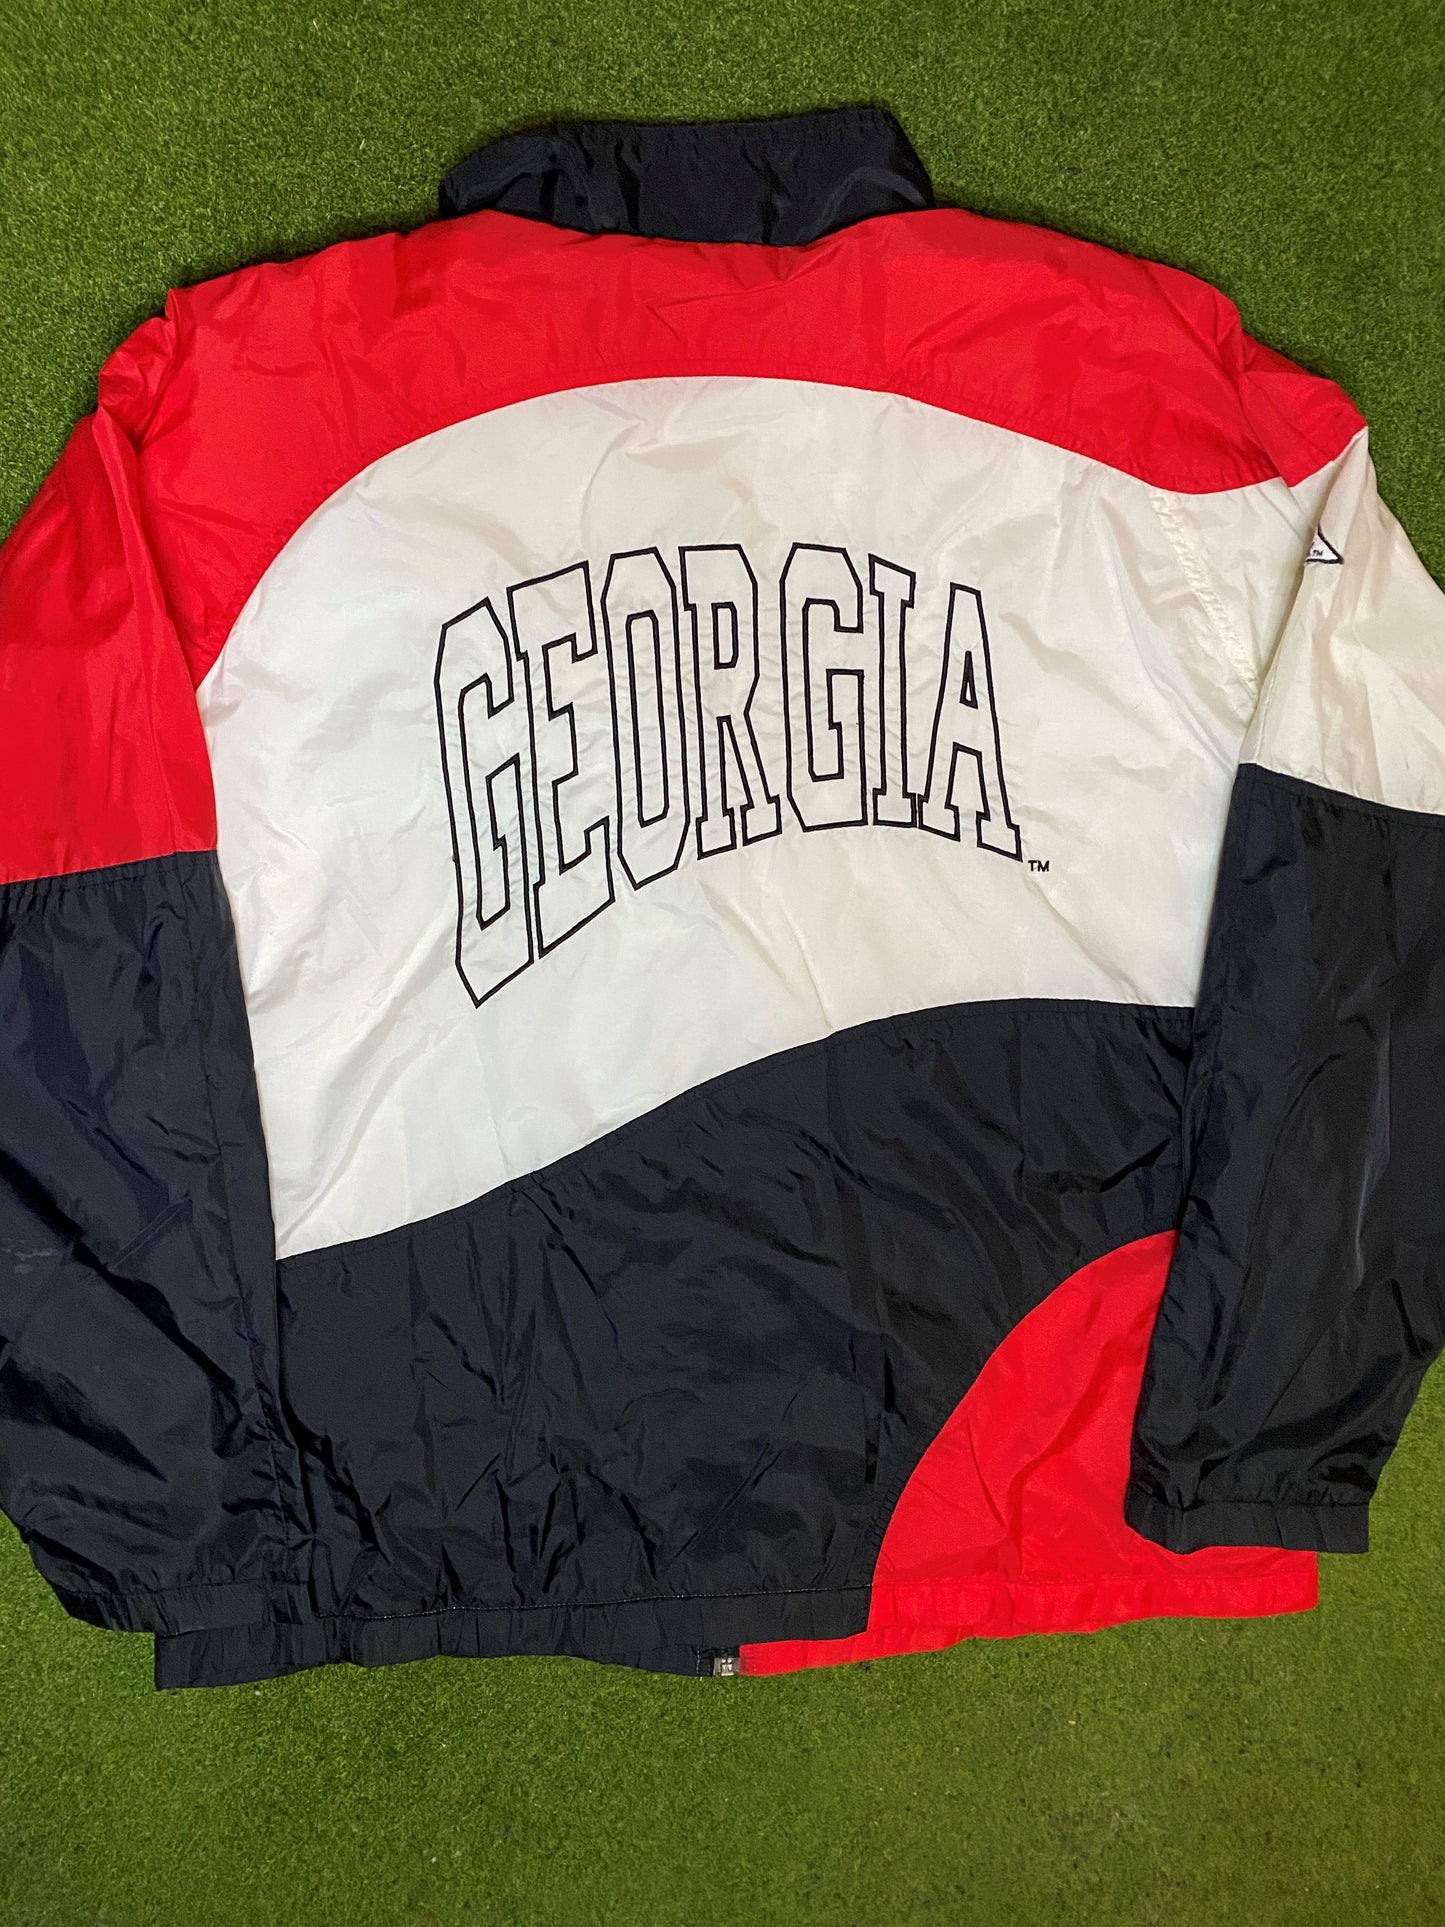 90s Georgia Bulldogs - Vintage College Windbreaker (XL)